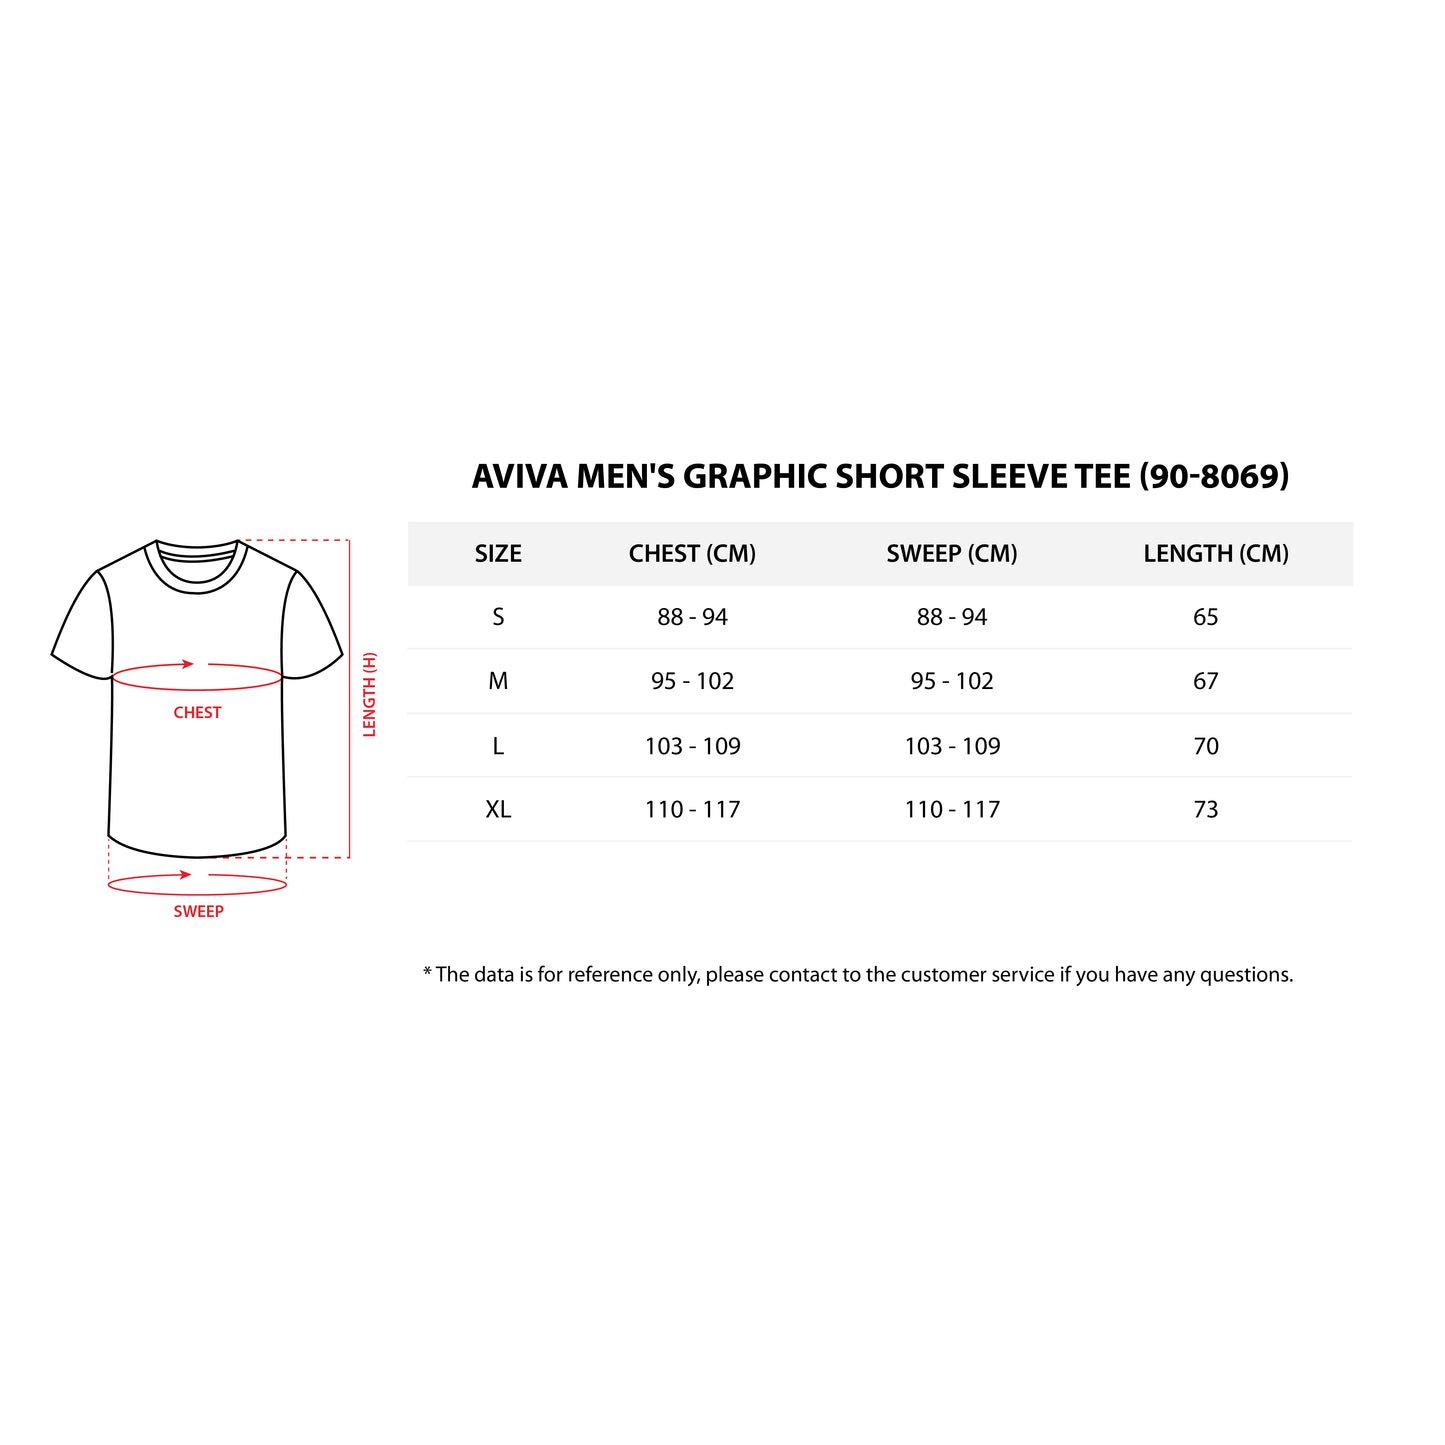 Aviva Men's Graphic Short Sleeve Tee (90-8069)